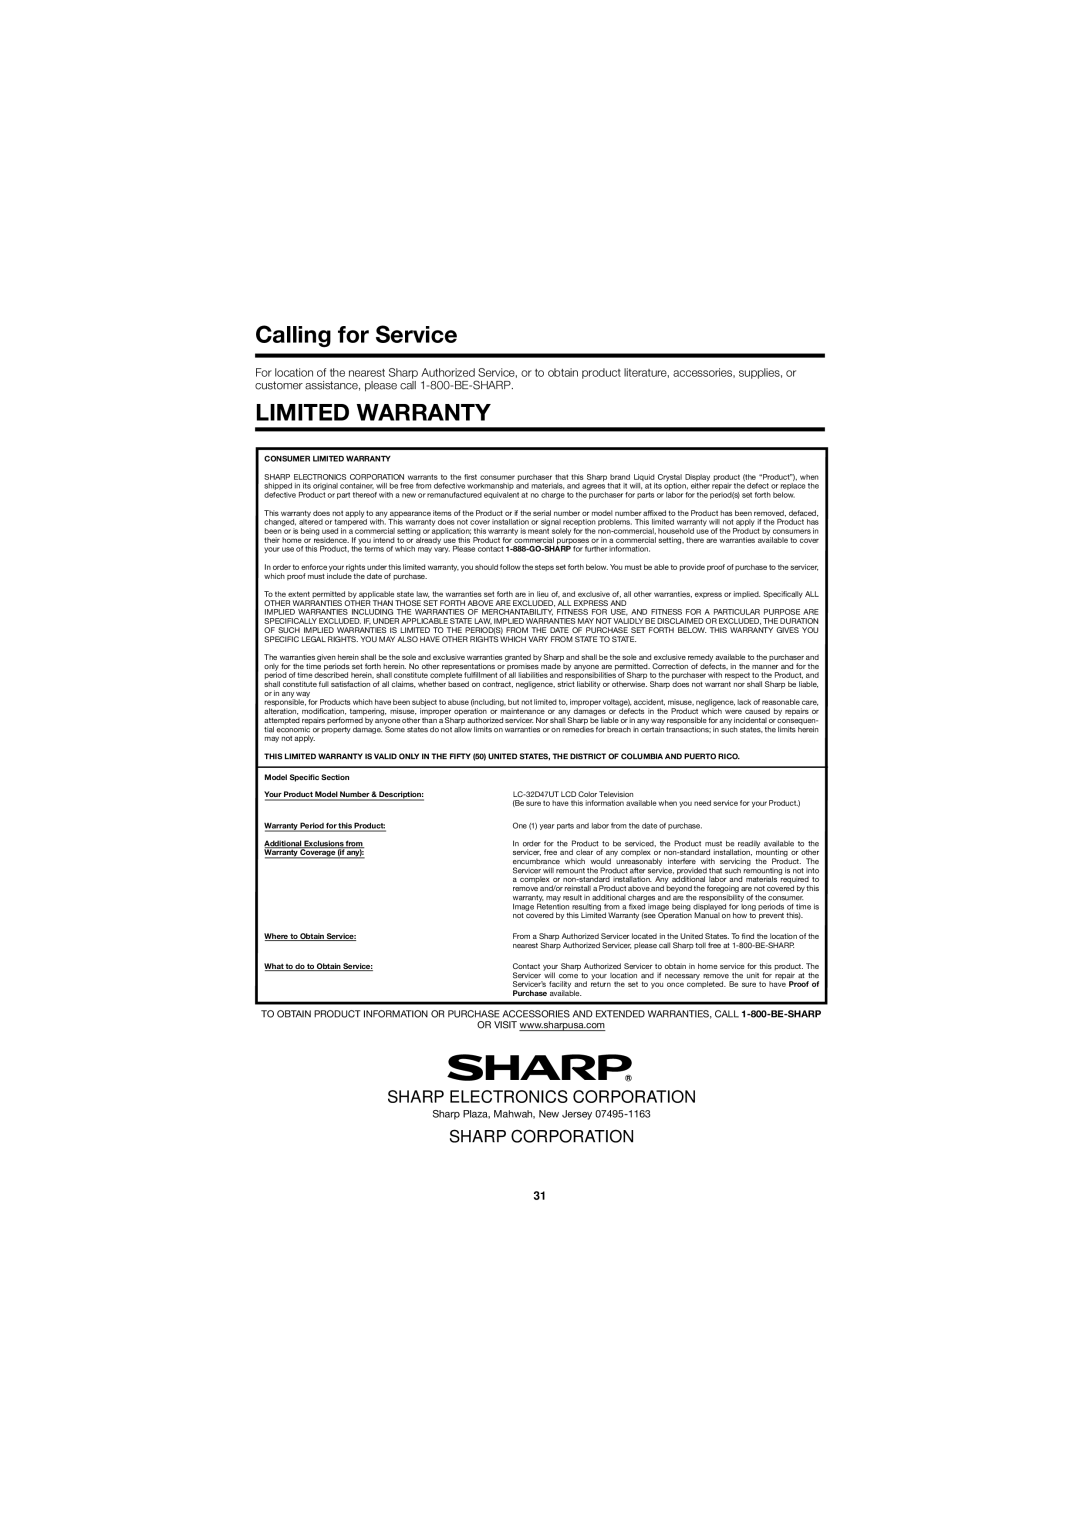 Sharp LC32D47UT operation manual Calling for Service, Limited Warranty, Sharp Electronics Corporation, Sharp Corporation 